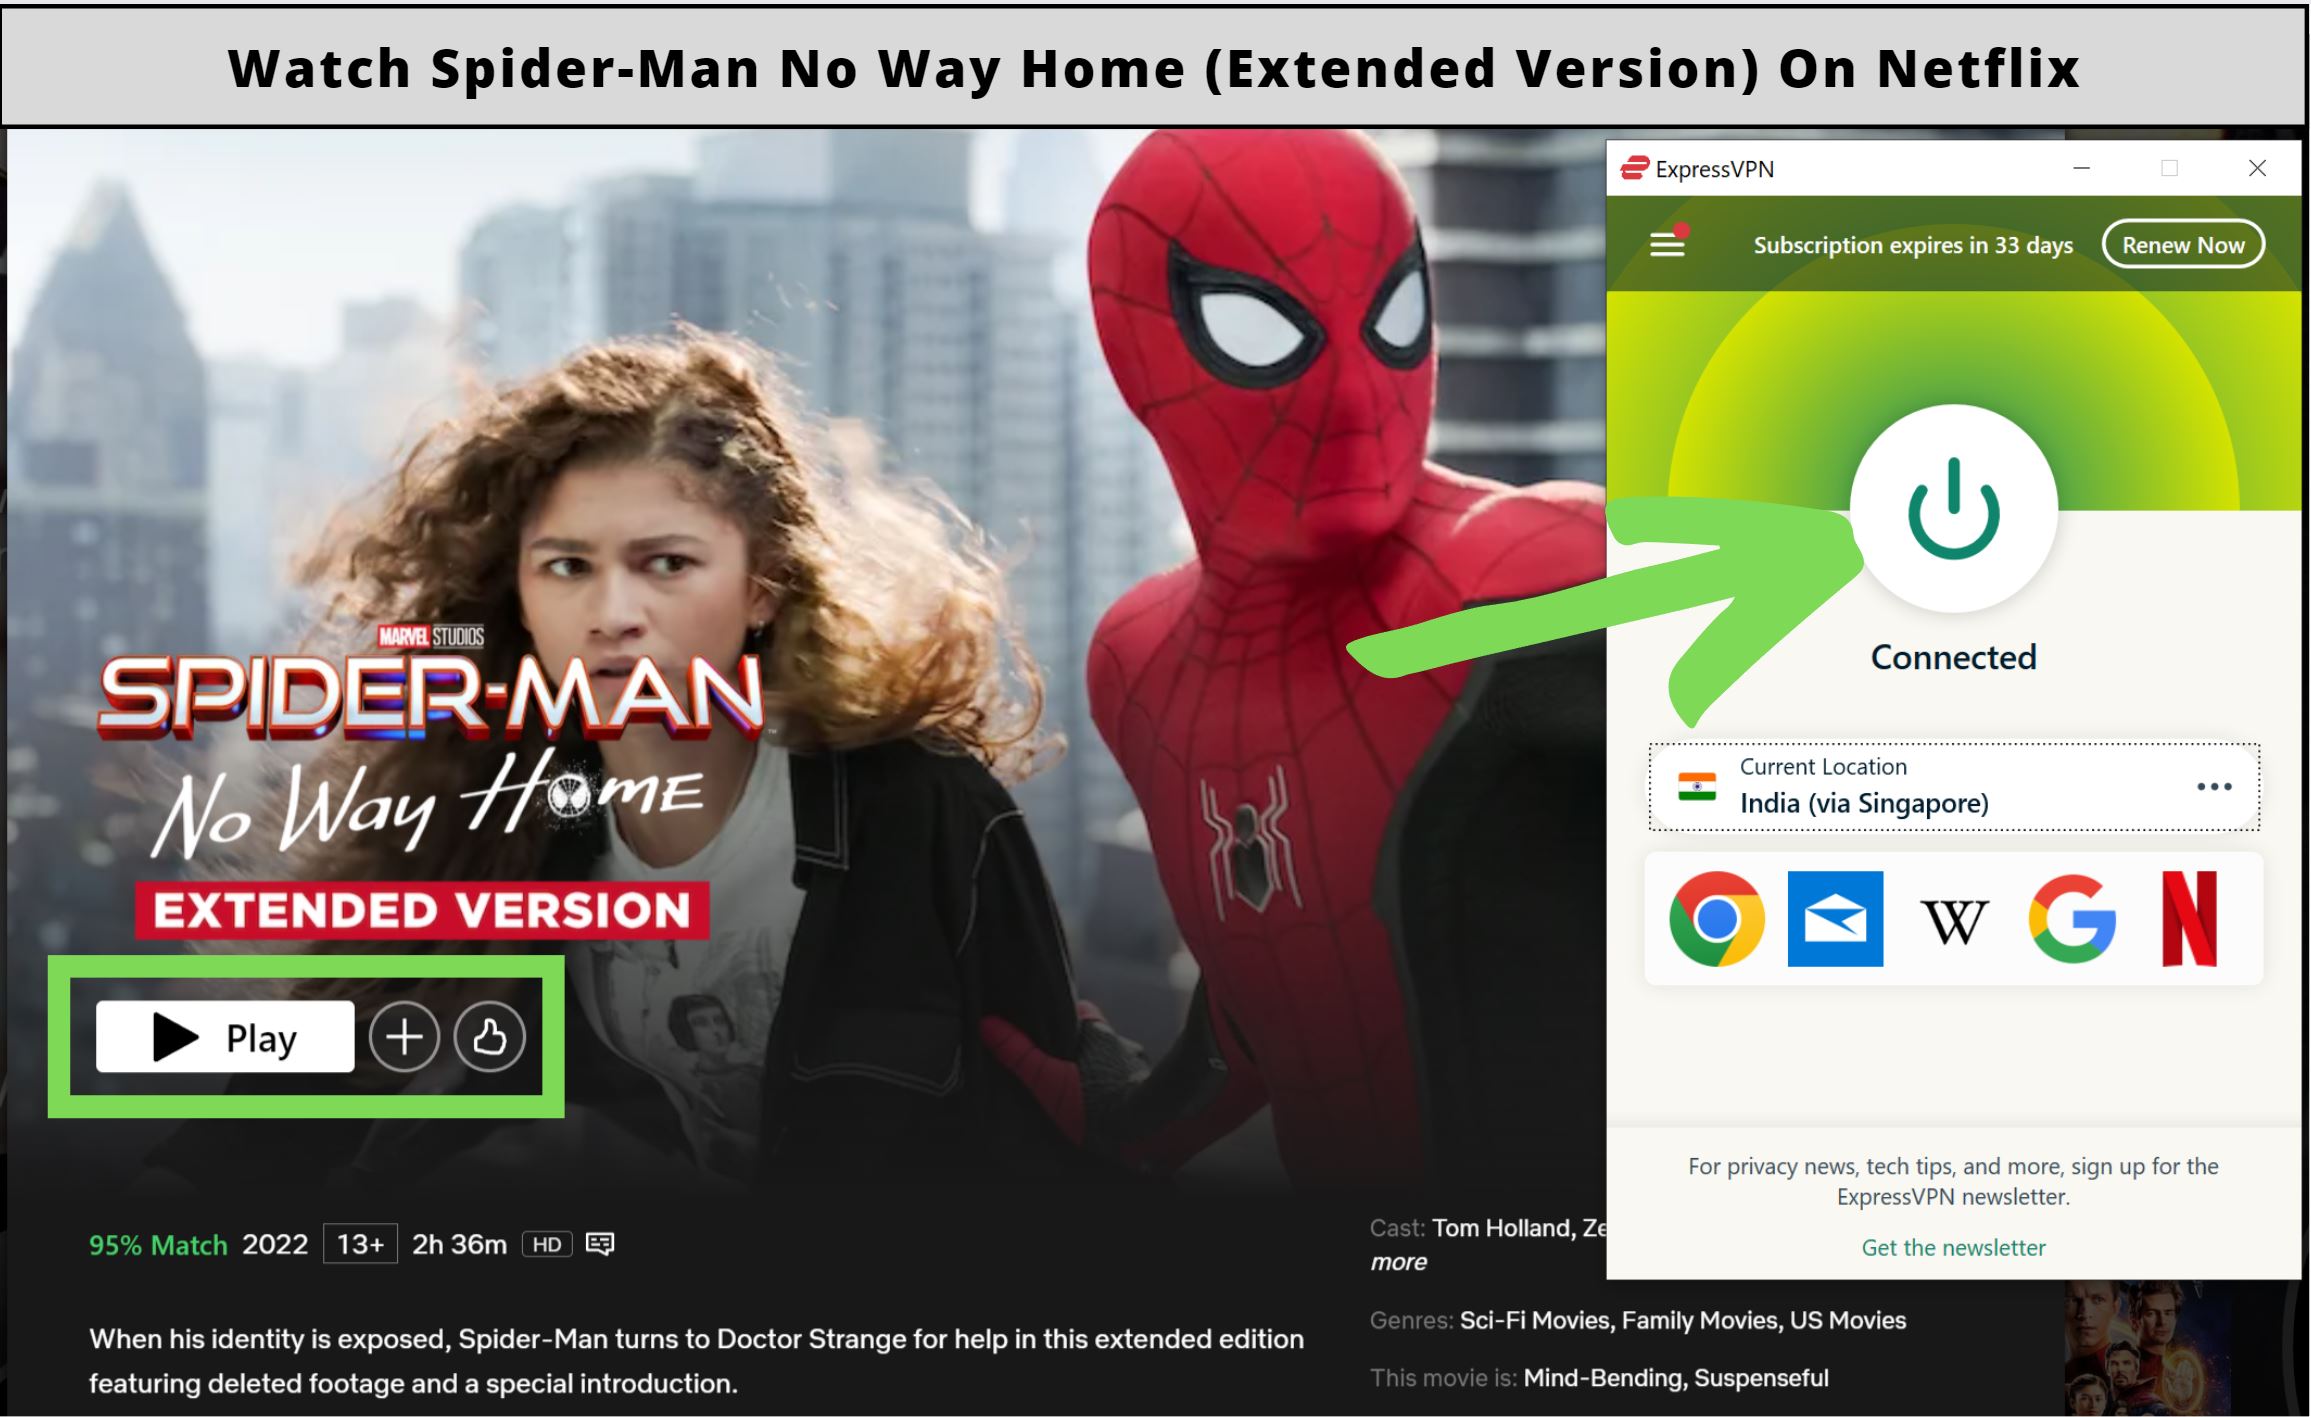 Is Spiderman No Way Home on Netflix?